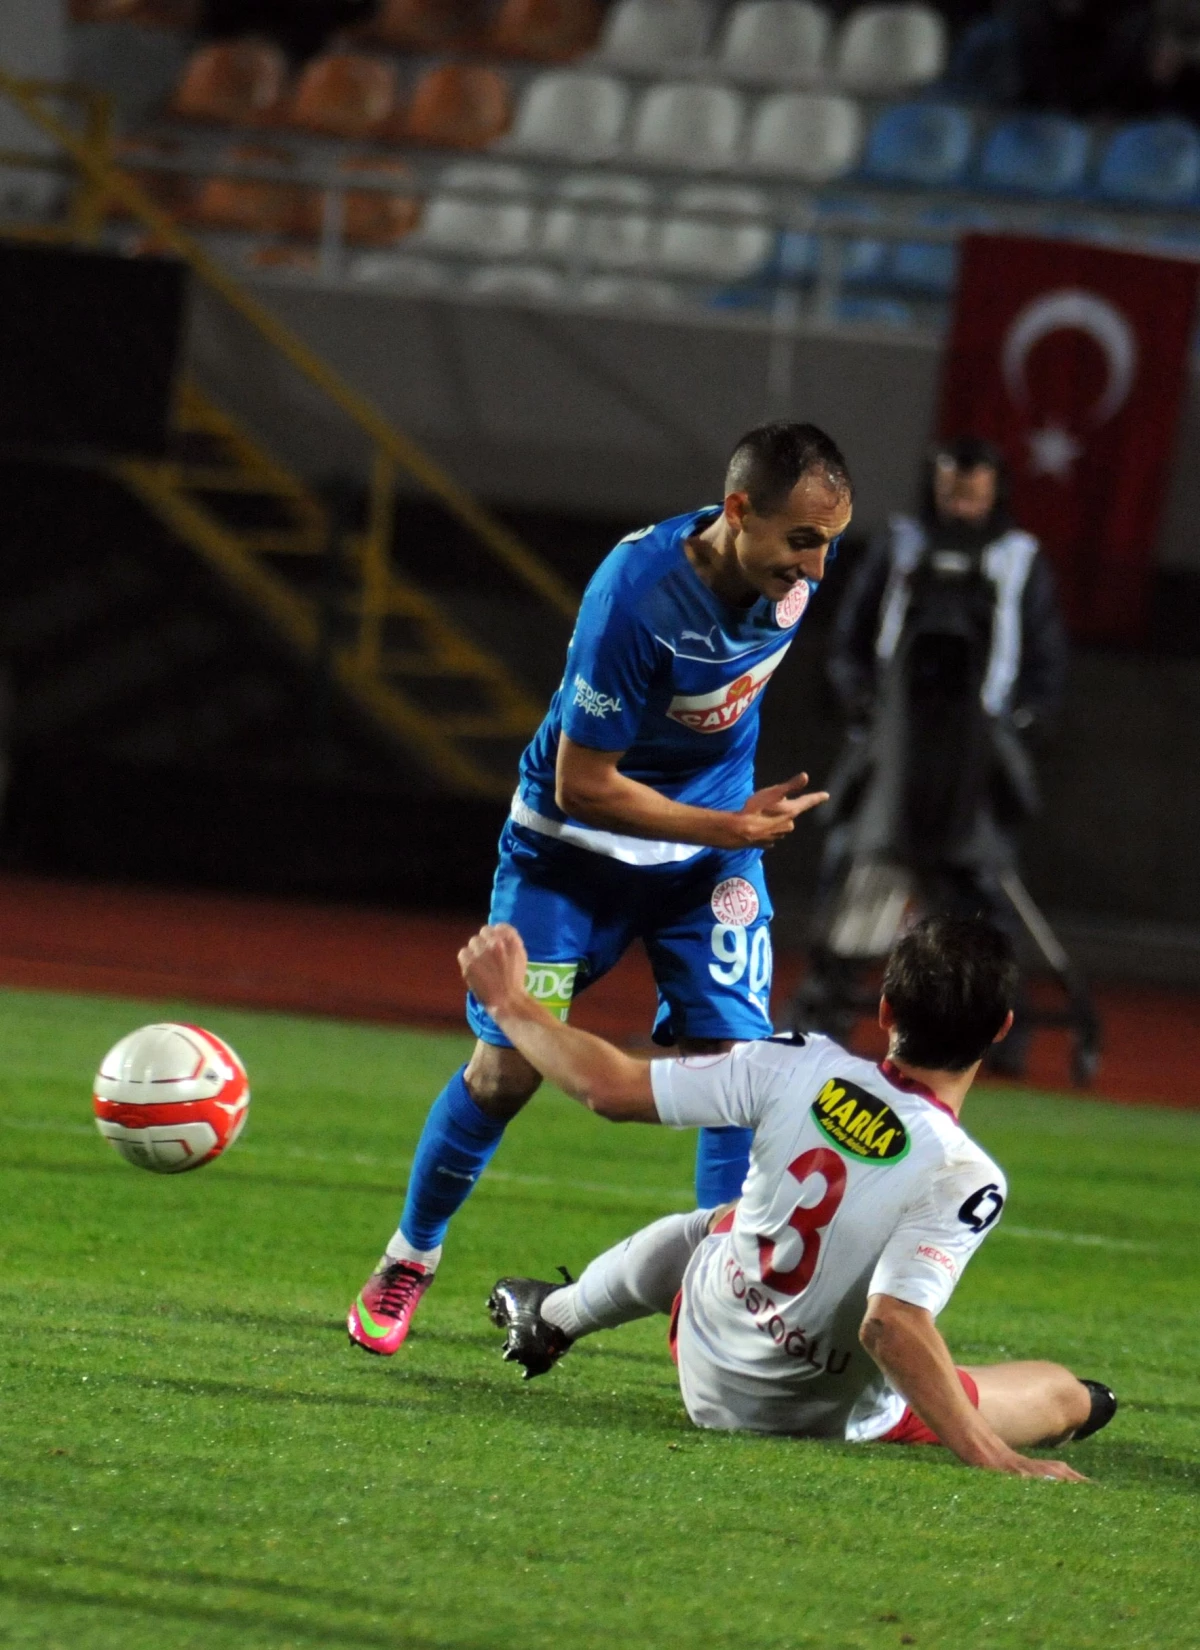 Medical Park Antalyaspor - Tokatspor: 6-1